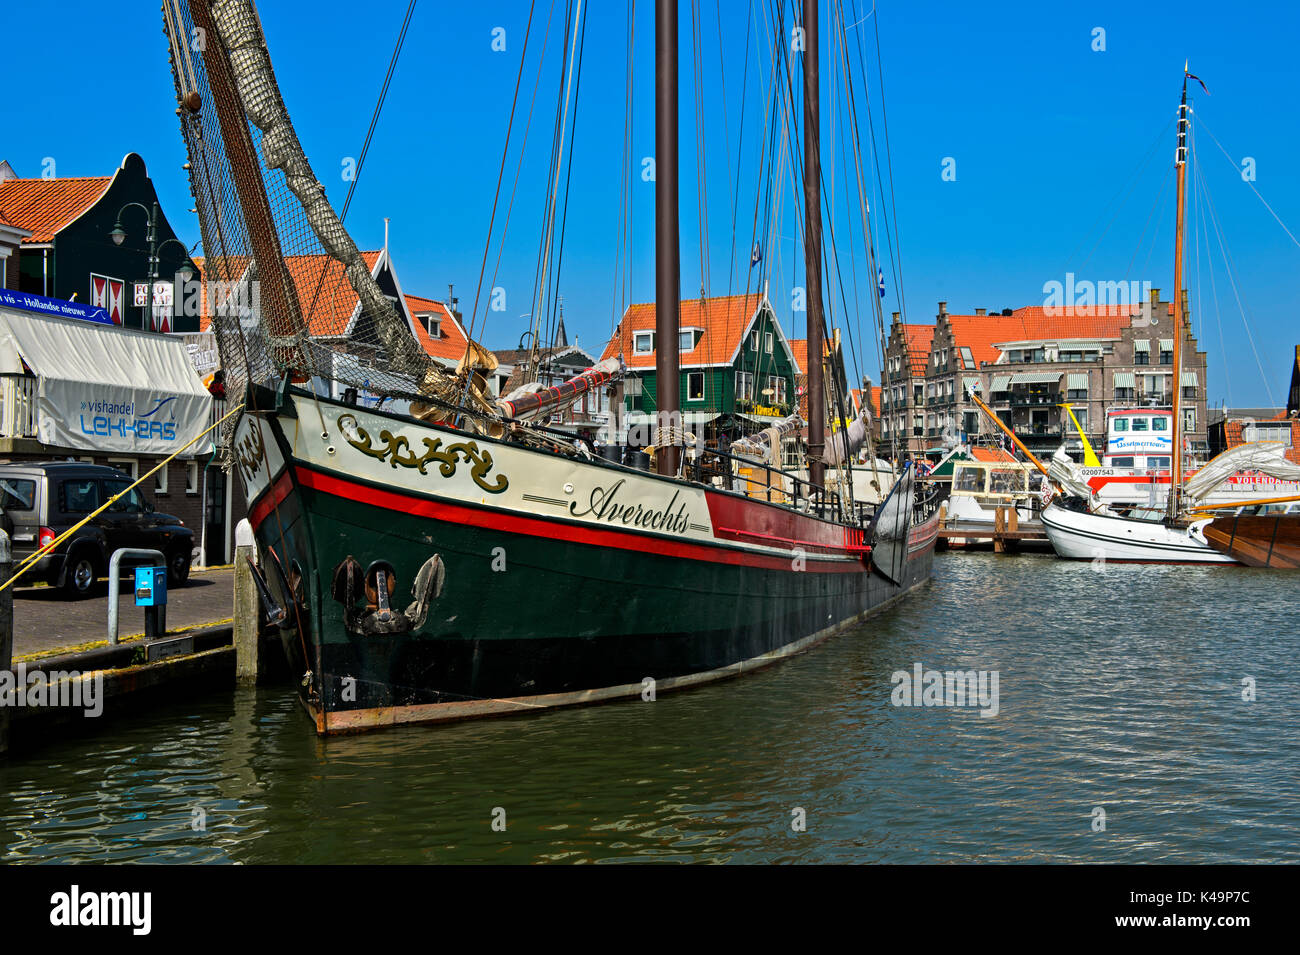 Vessel In The Harbor, Volendamm, North Holland, Netherlands Stock Photo